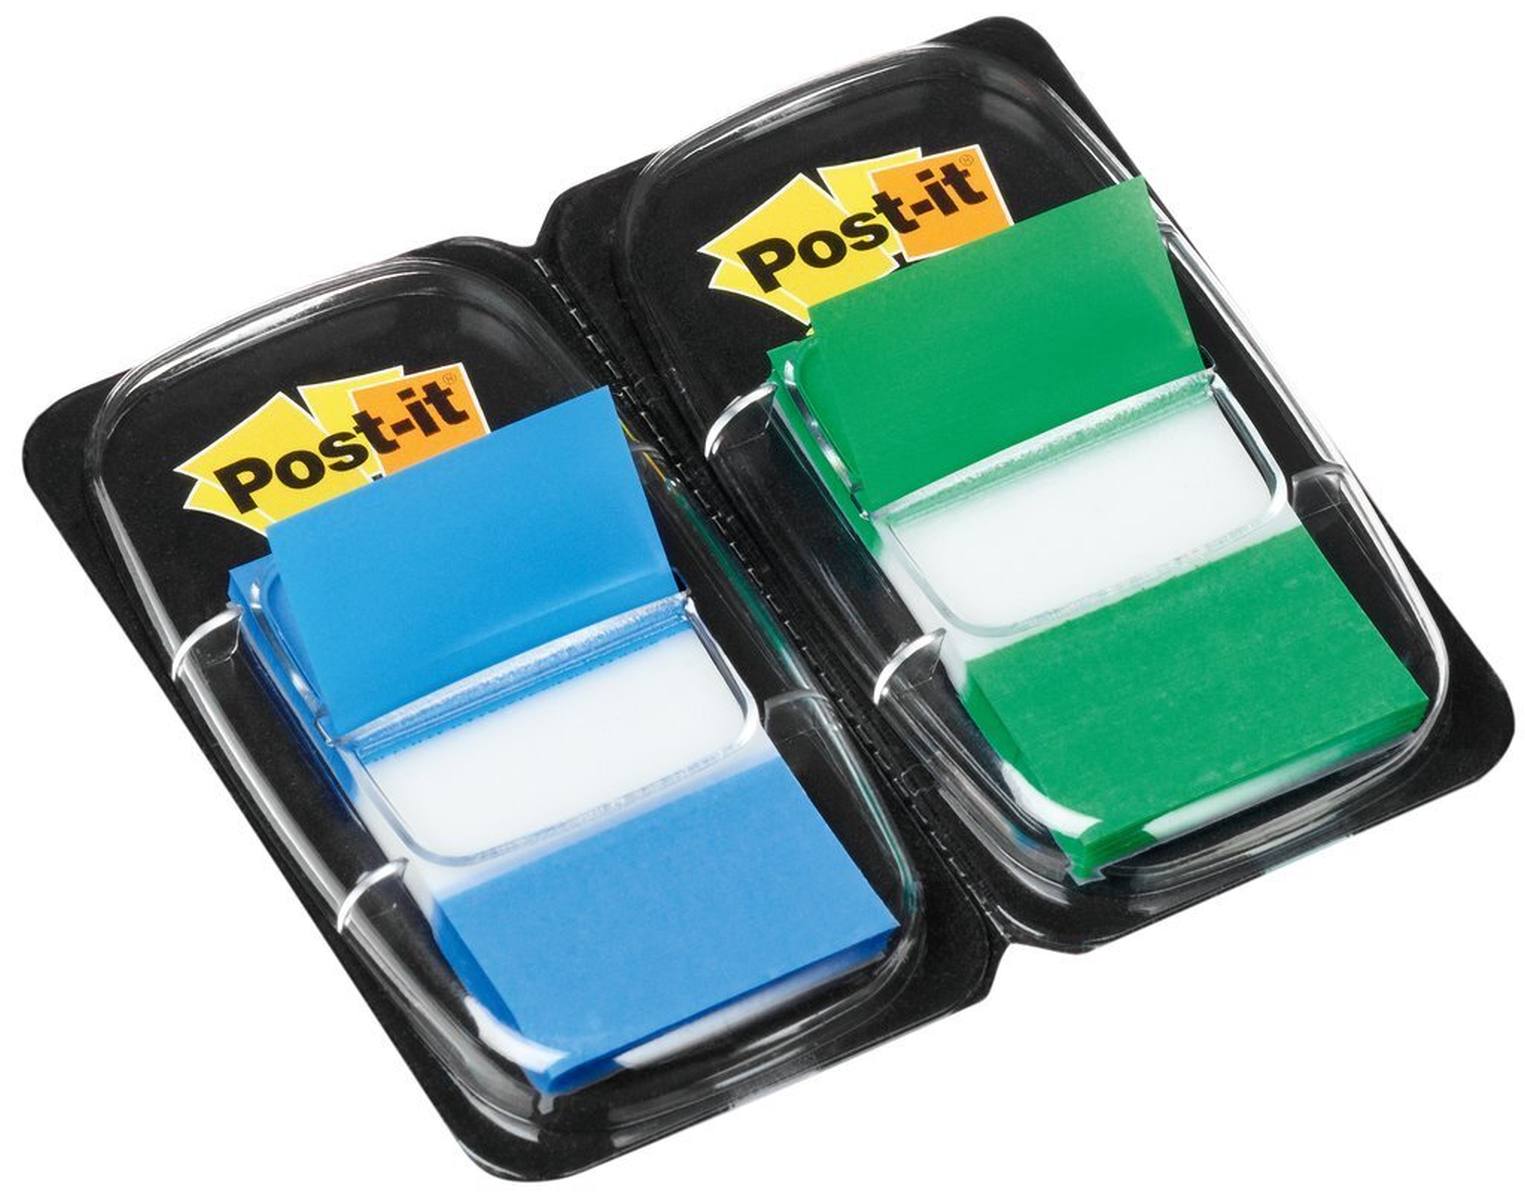 3M Post-it Index I680-GB2, 25,4 mm x 43,2 mm, bleu, vert, 2 x 50 bandes adhésives dans un distributeur